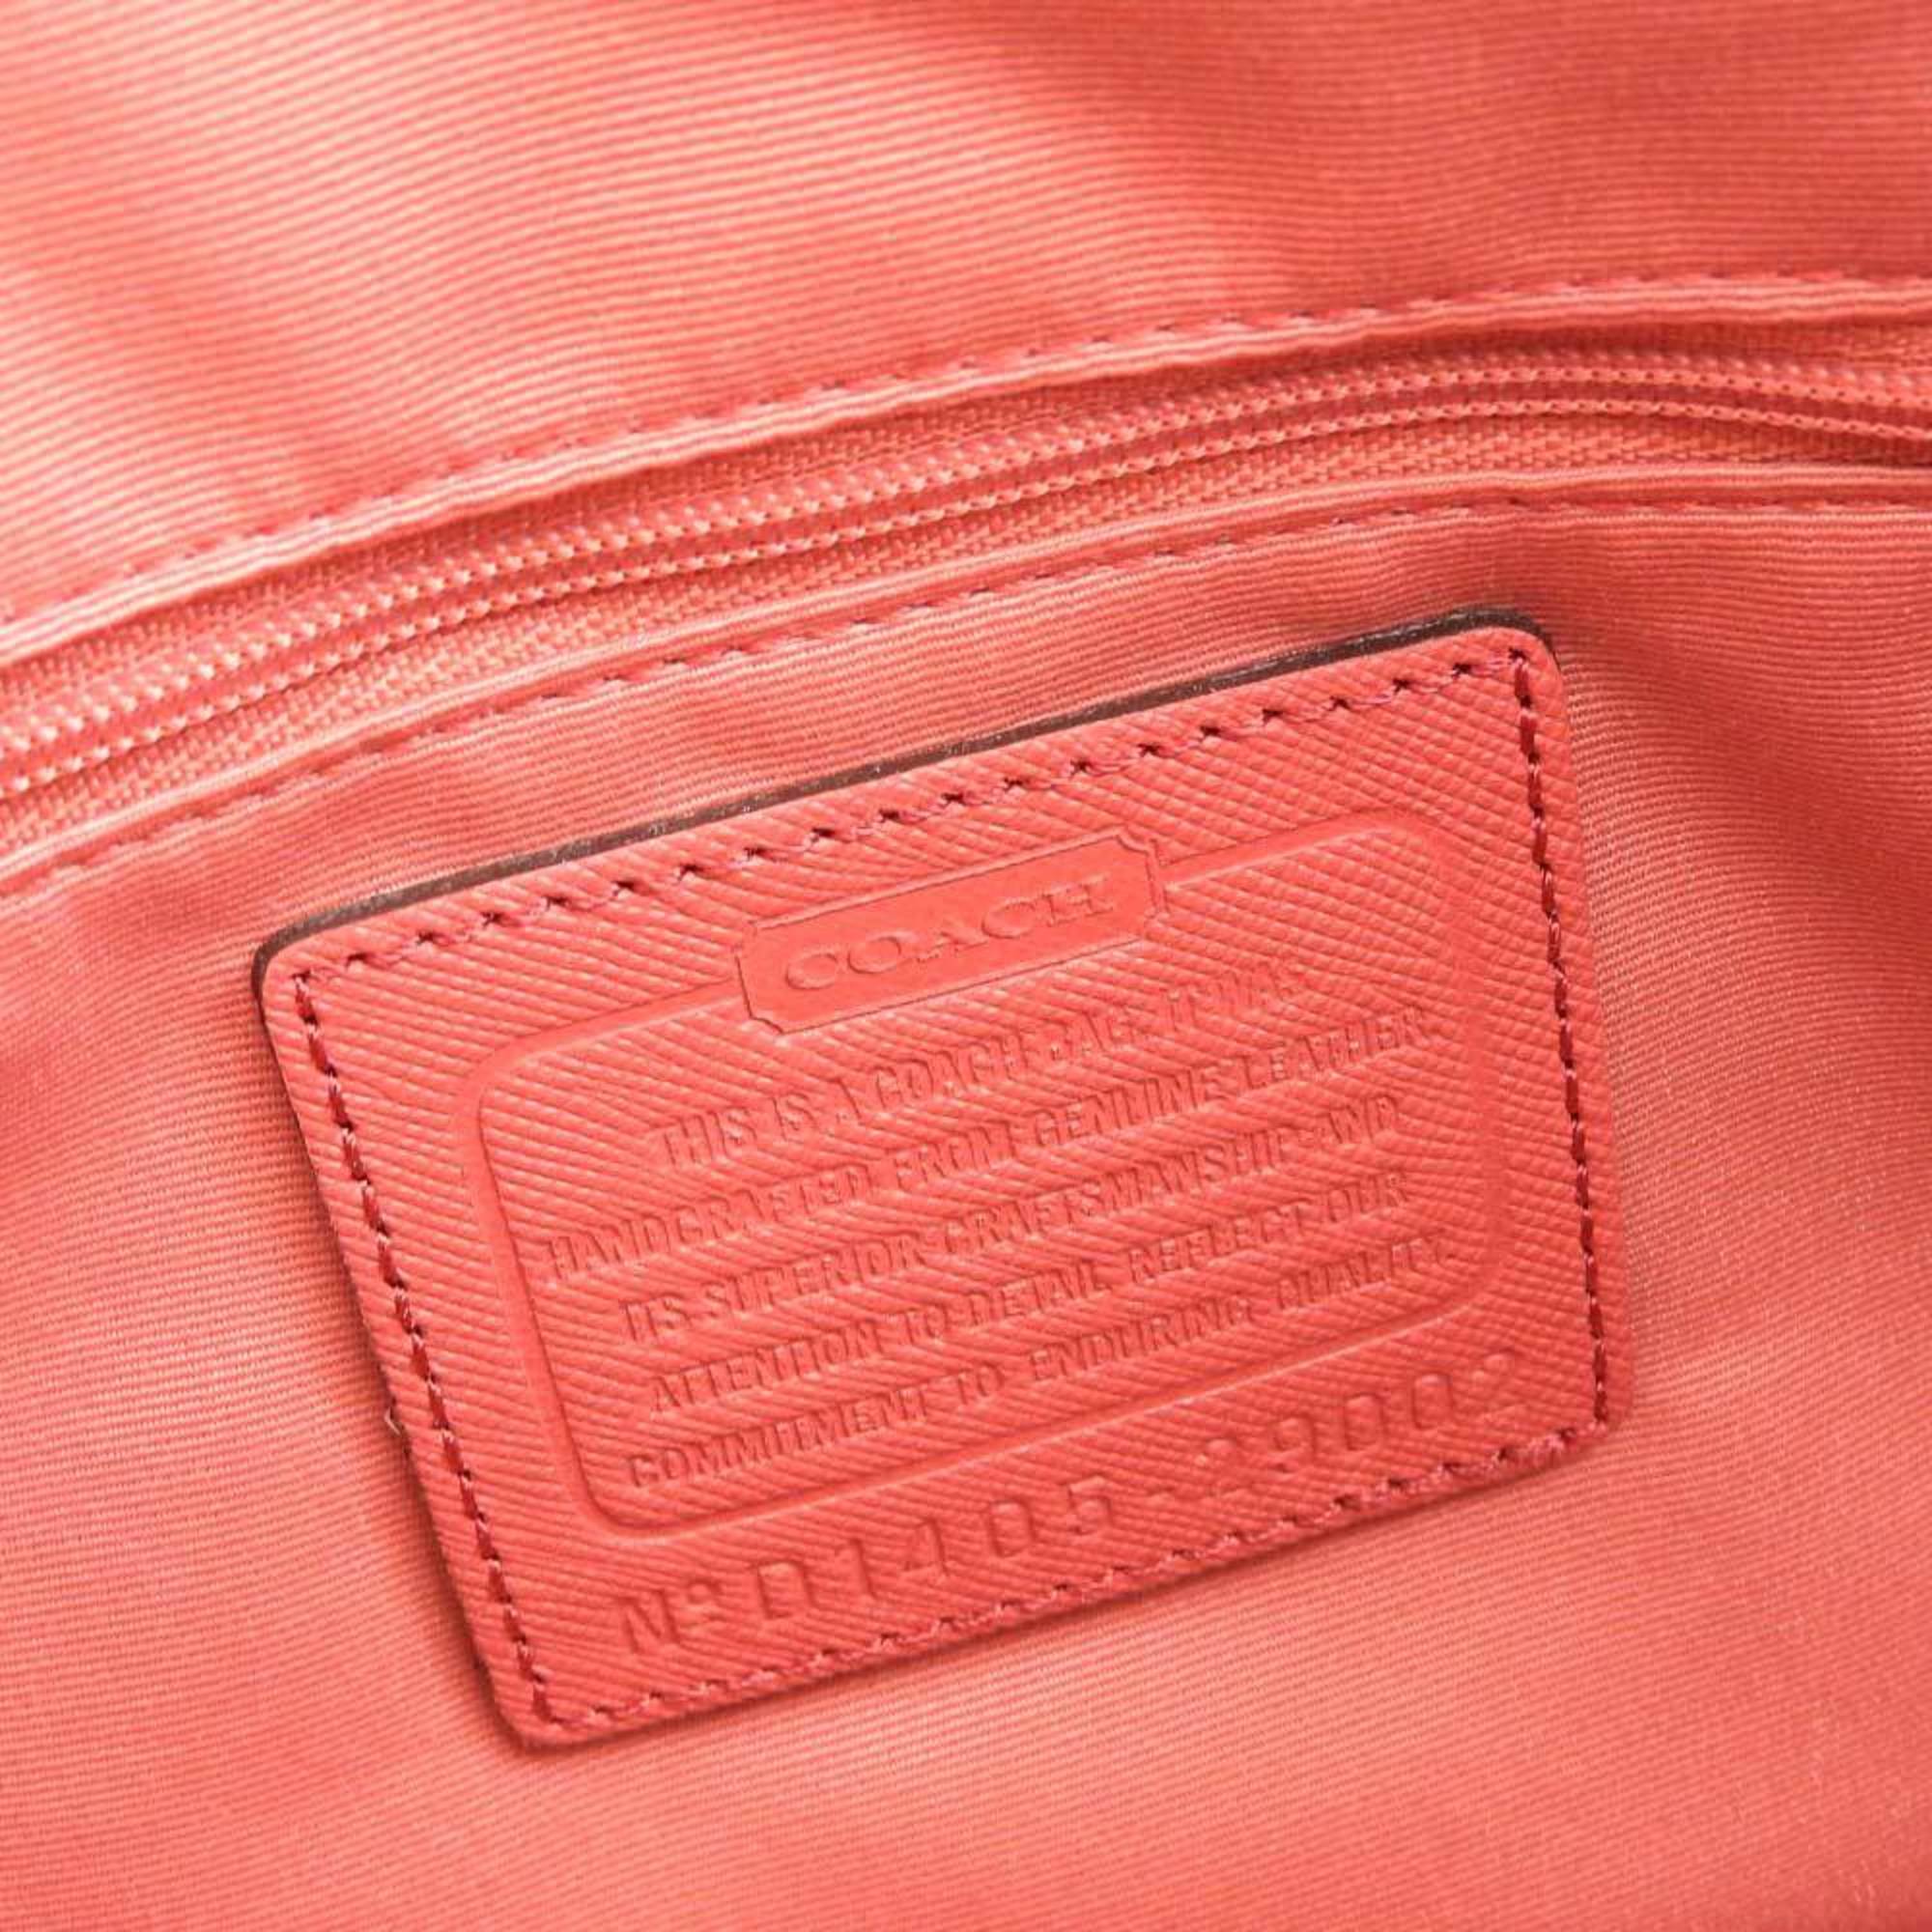 Coach COACH Madison tote bag saffiano leather pink 29002